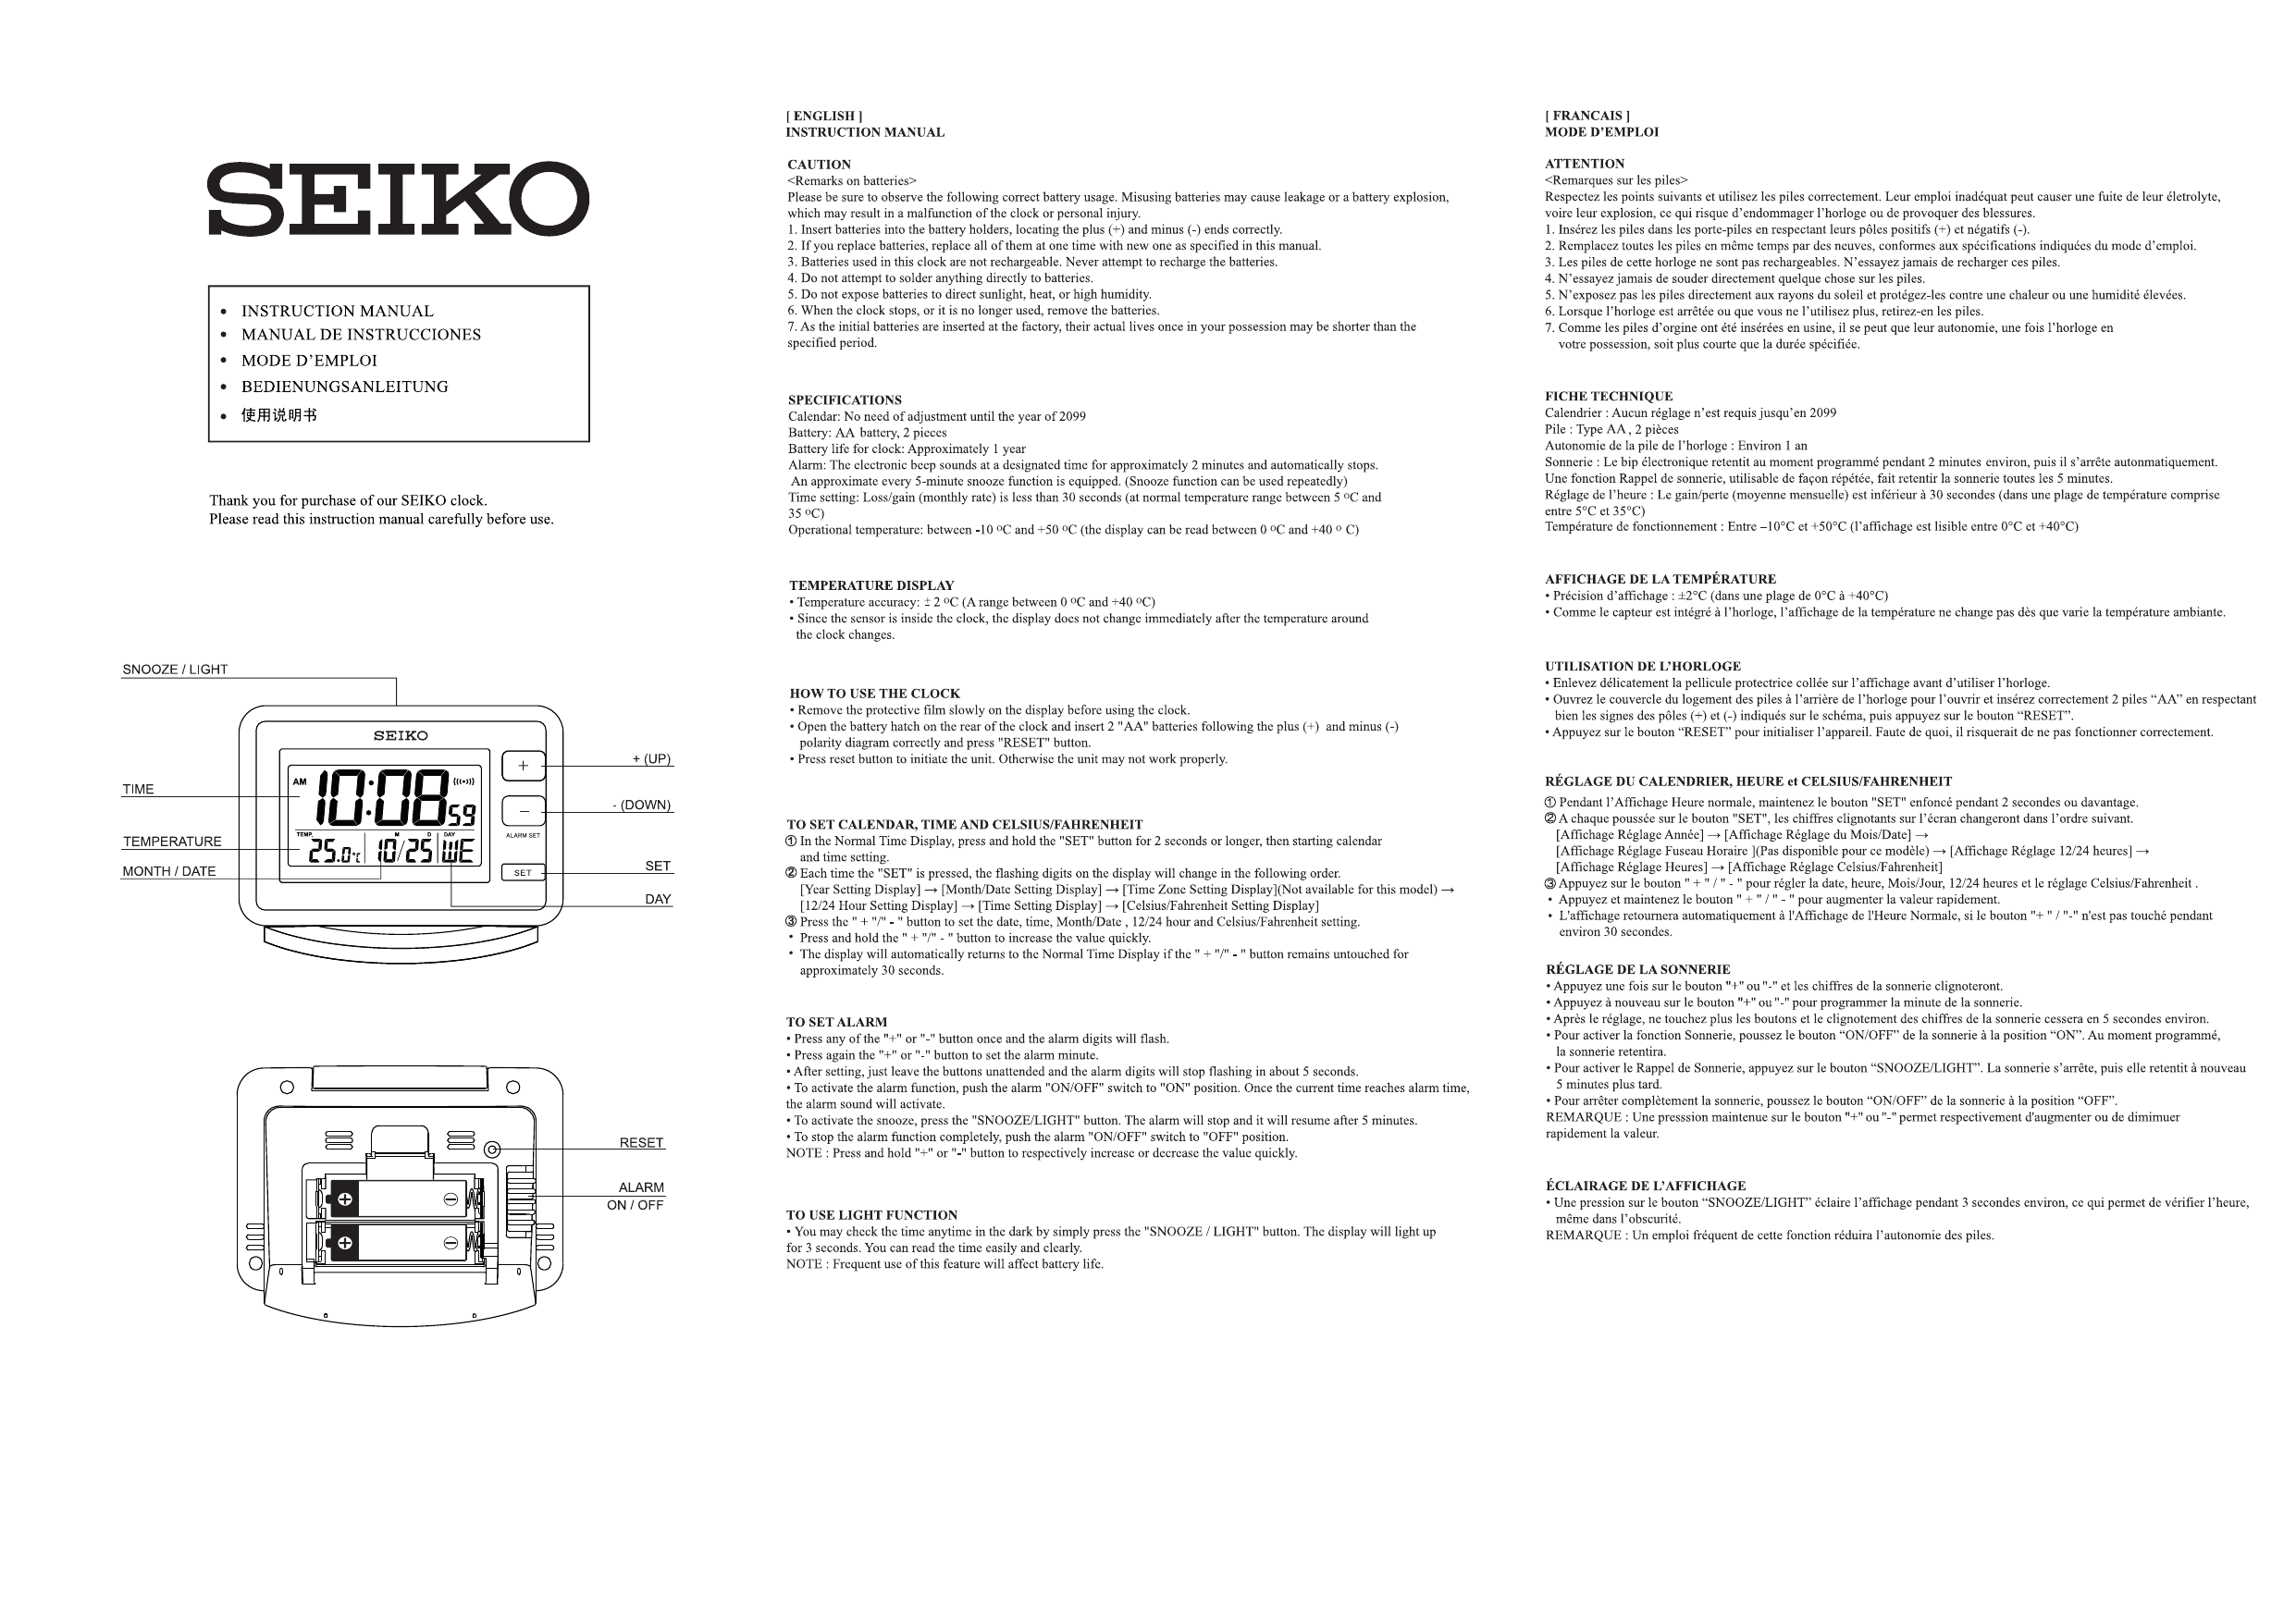 Seiko LCD Alarm Clock Instruction Manual | Manualzz